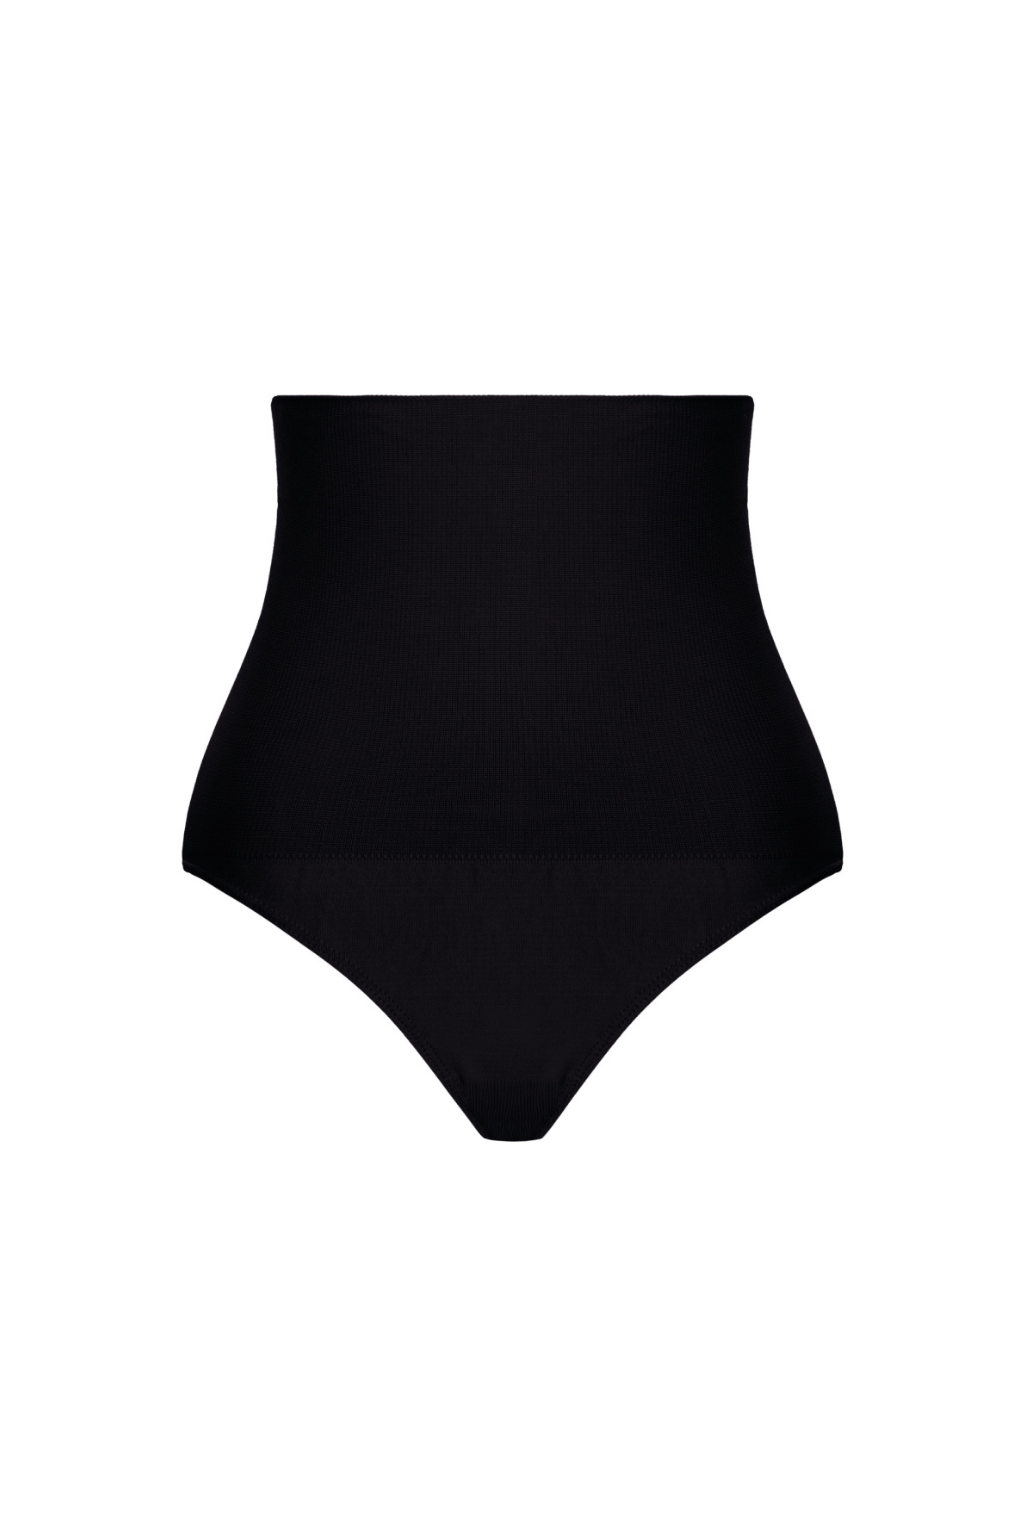 LUPO Seamless Slim Waist Corset with Thong Panties Design